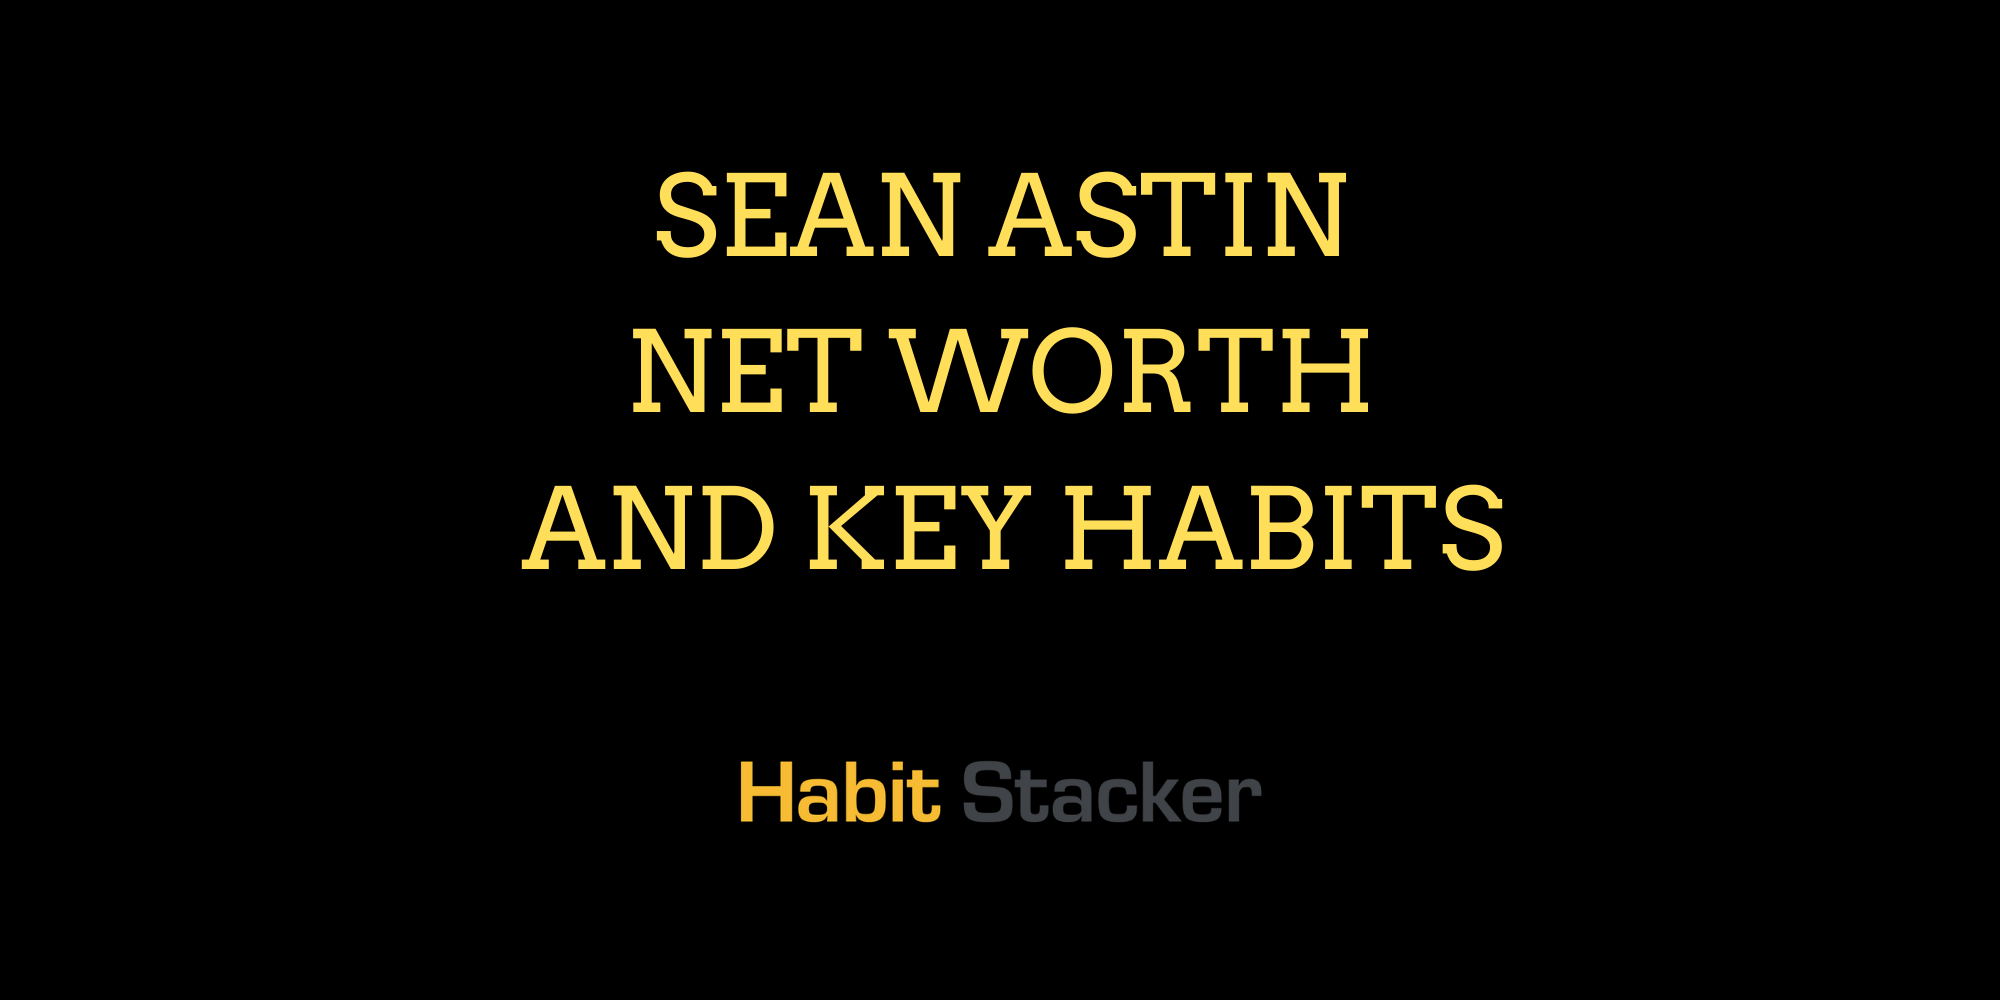 Sean Astin Net Worth and Key Habits